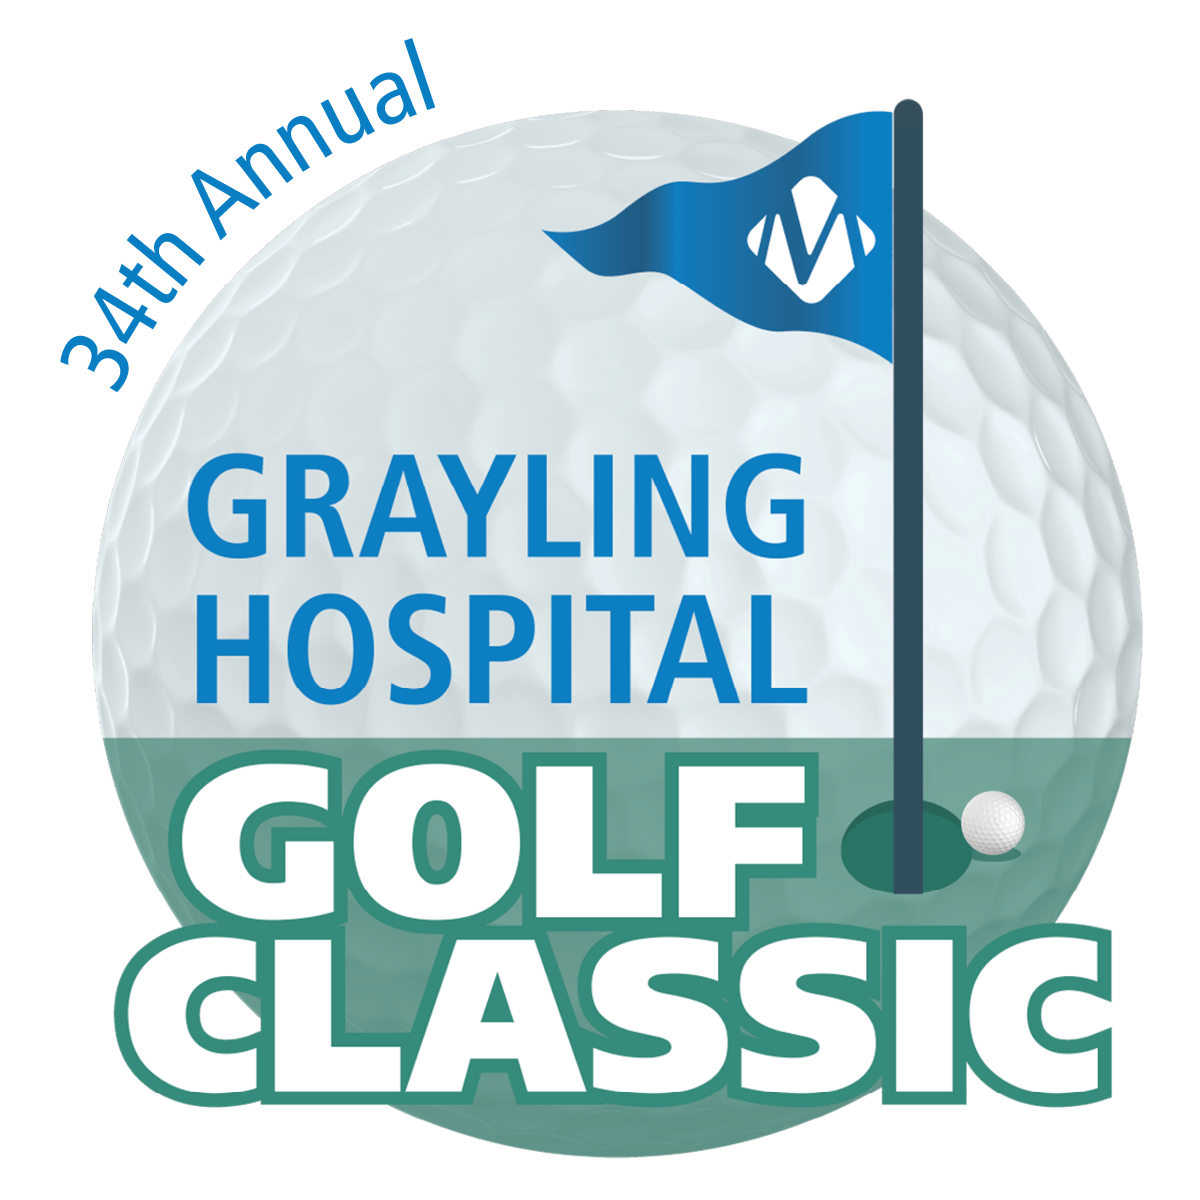 34th annual grayling hospital golf classic